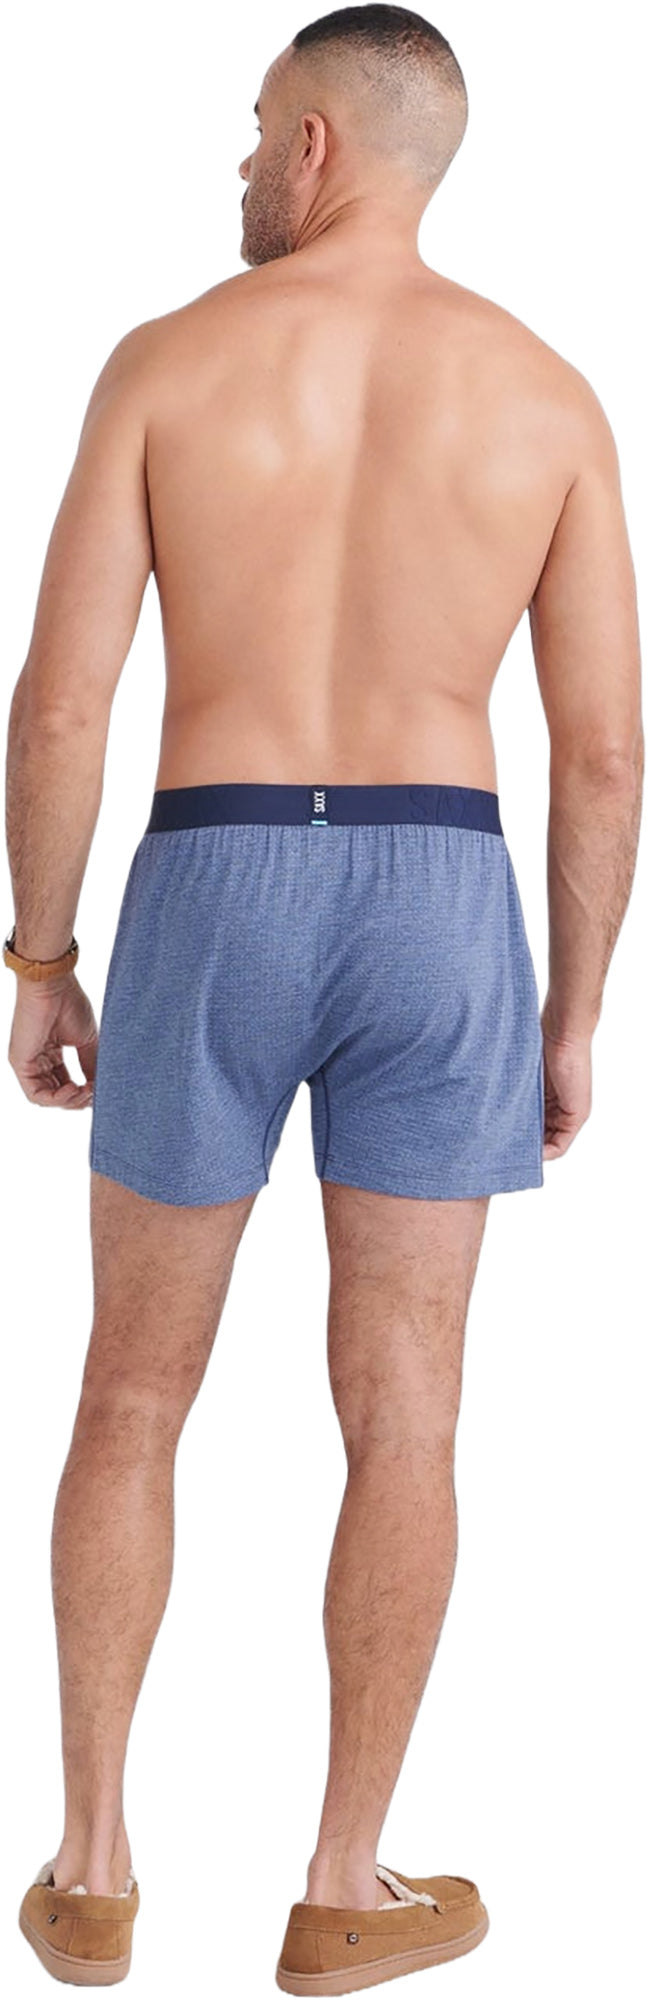 SAXX DropTemp Cooling Sleep Boxer Shorts - Men's